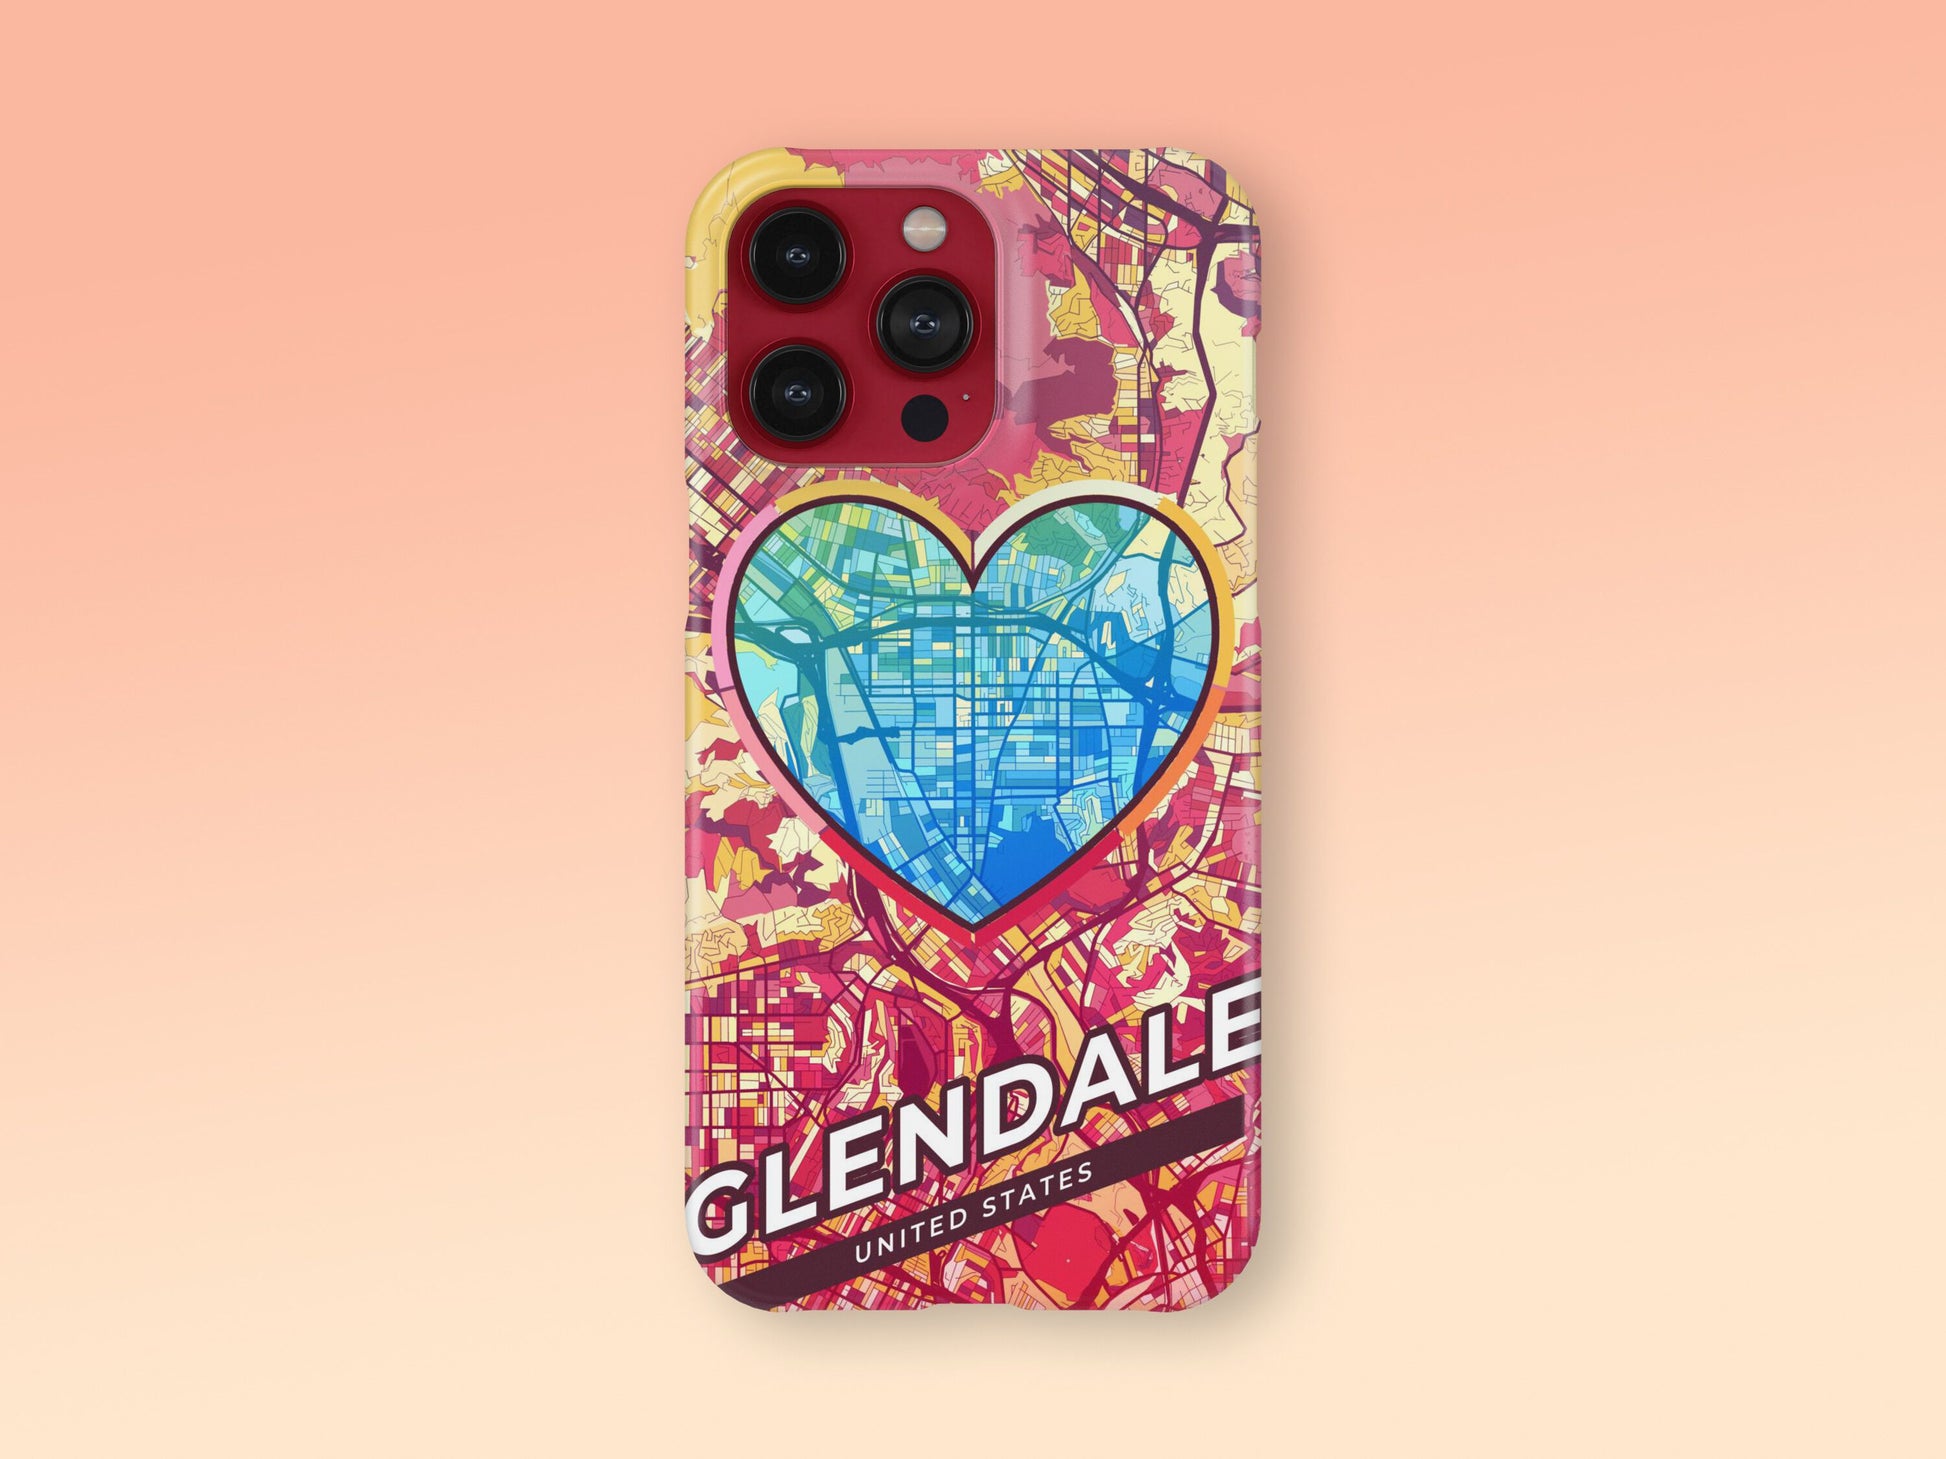 Glendale Arizona slim phone case with colorful icon. Birthday, wedding or housewarming gift. Couple match cases. 2